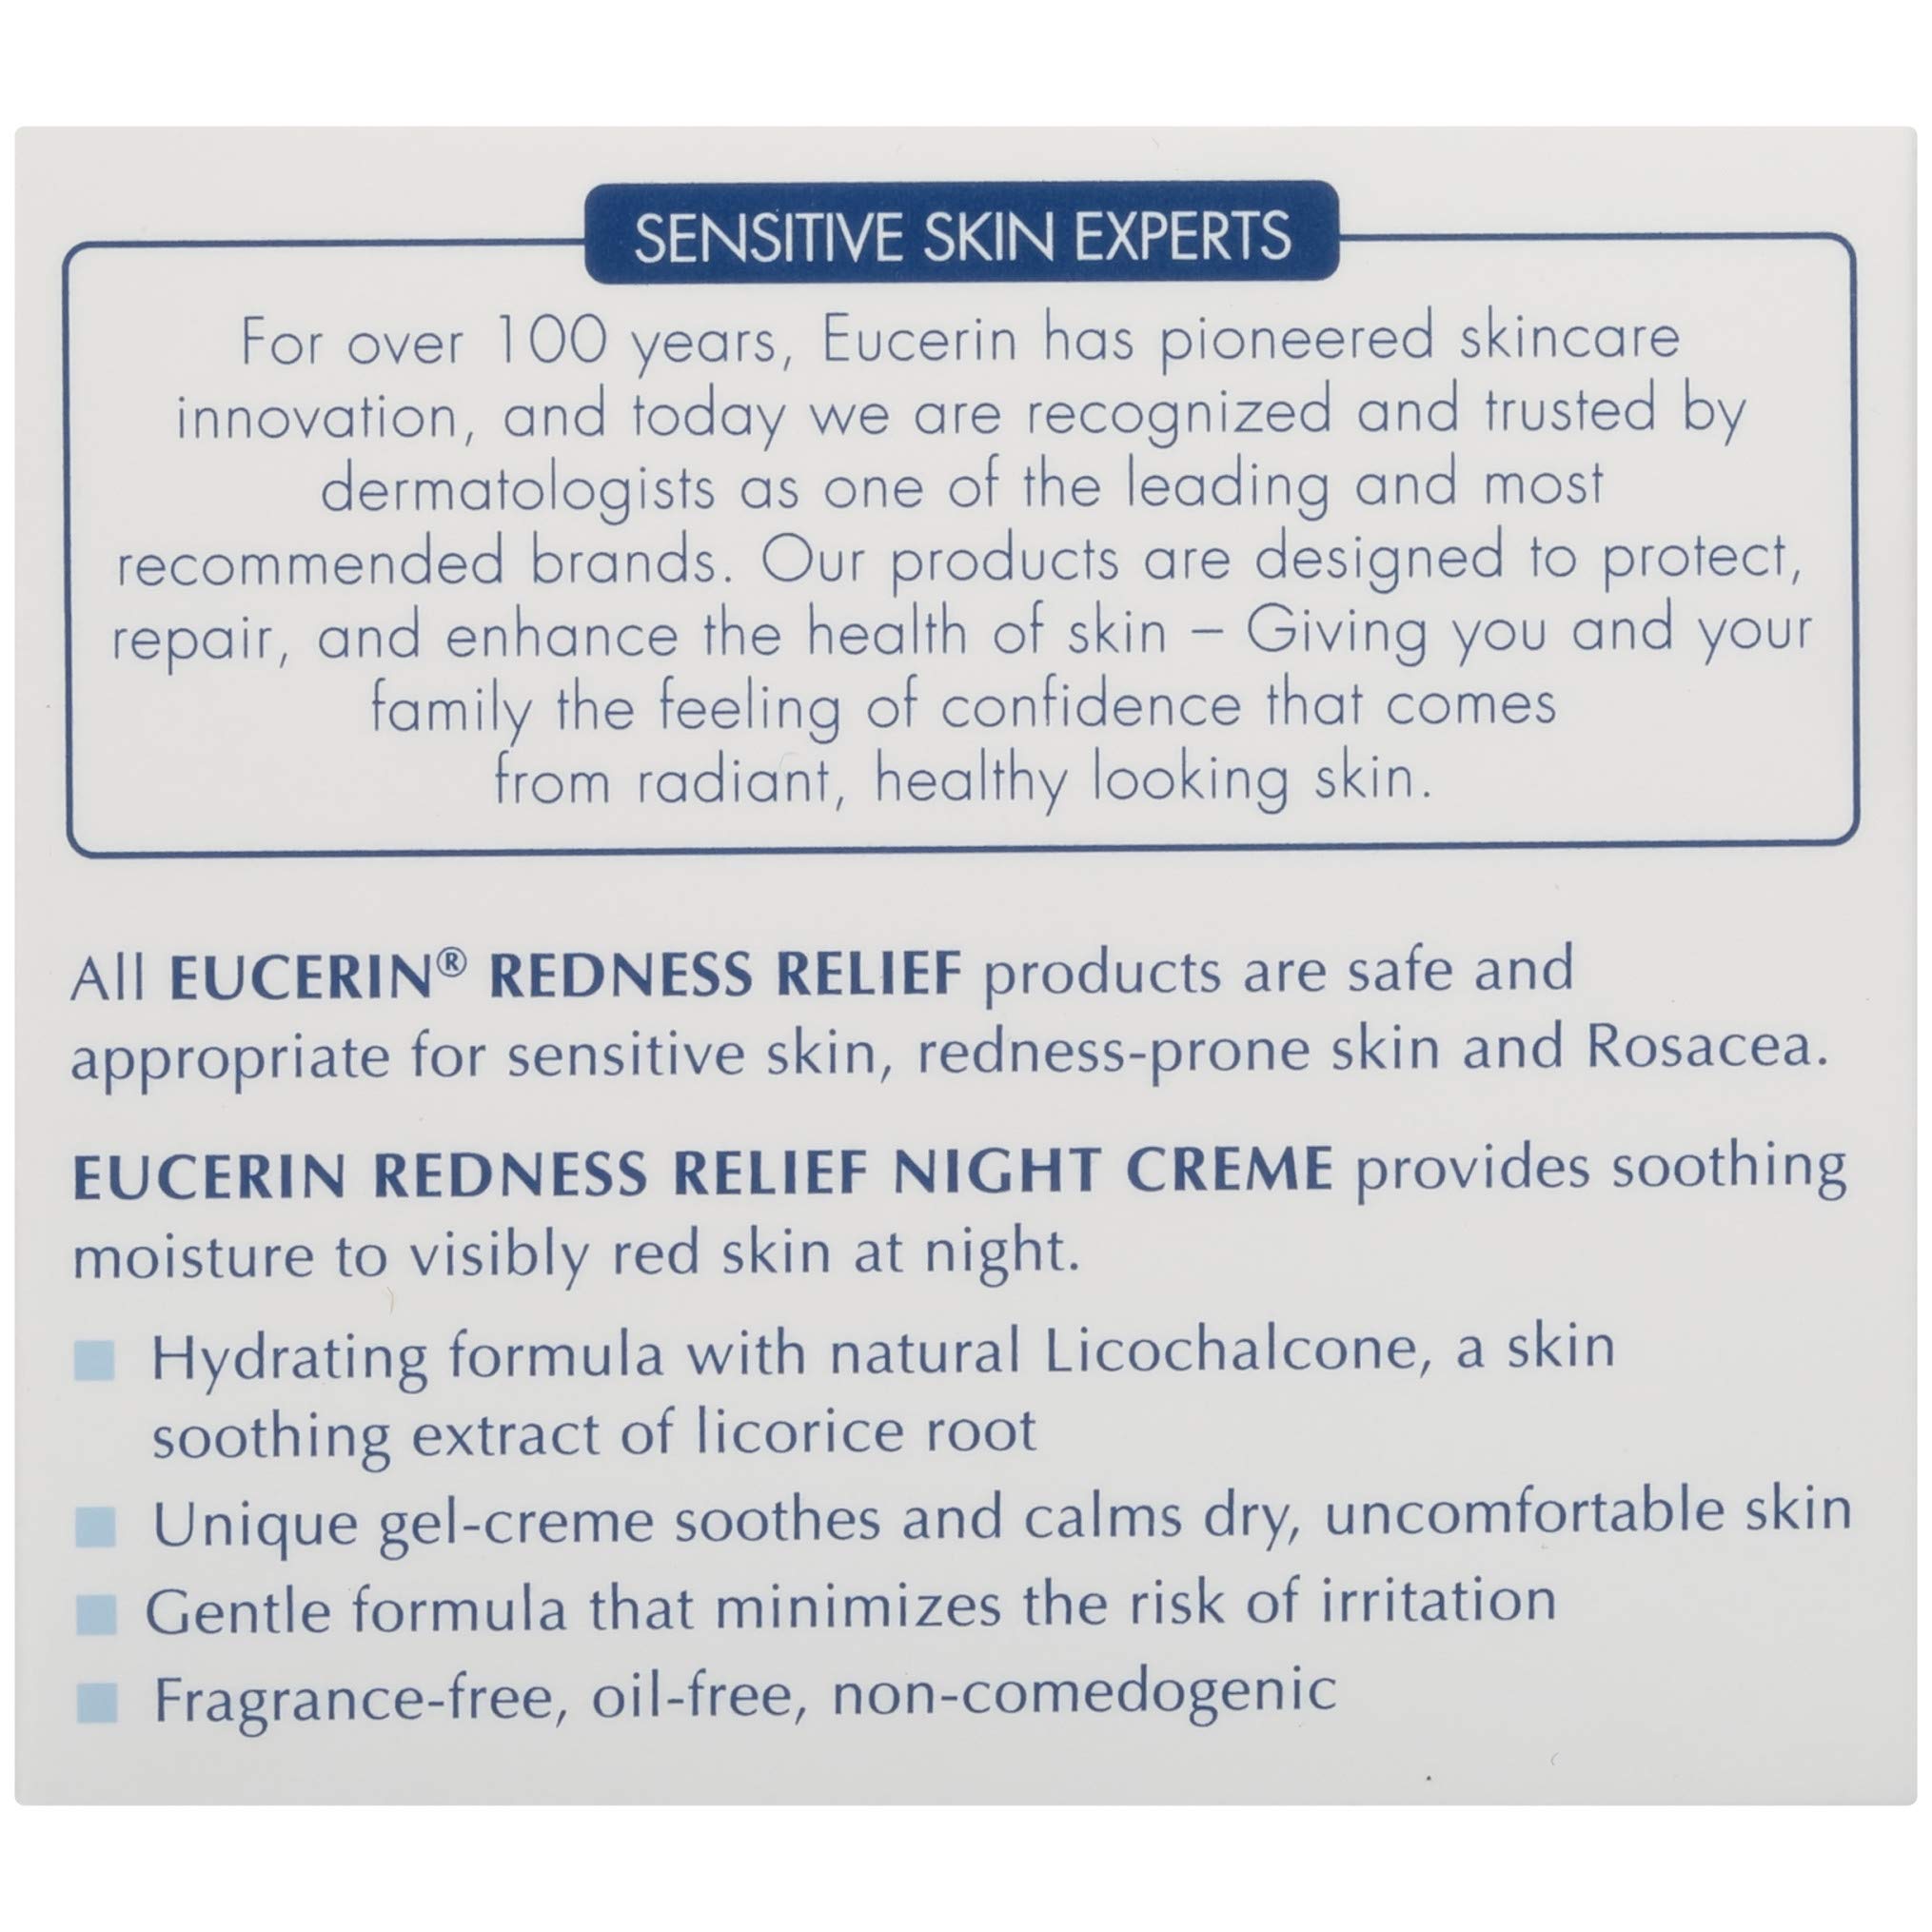 Eucerin Redness Relief Night Creme - Gently Hydrates To Reduce Redness-Prone Skin At Night - 1.7 oz Jar